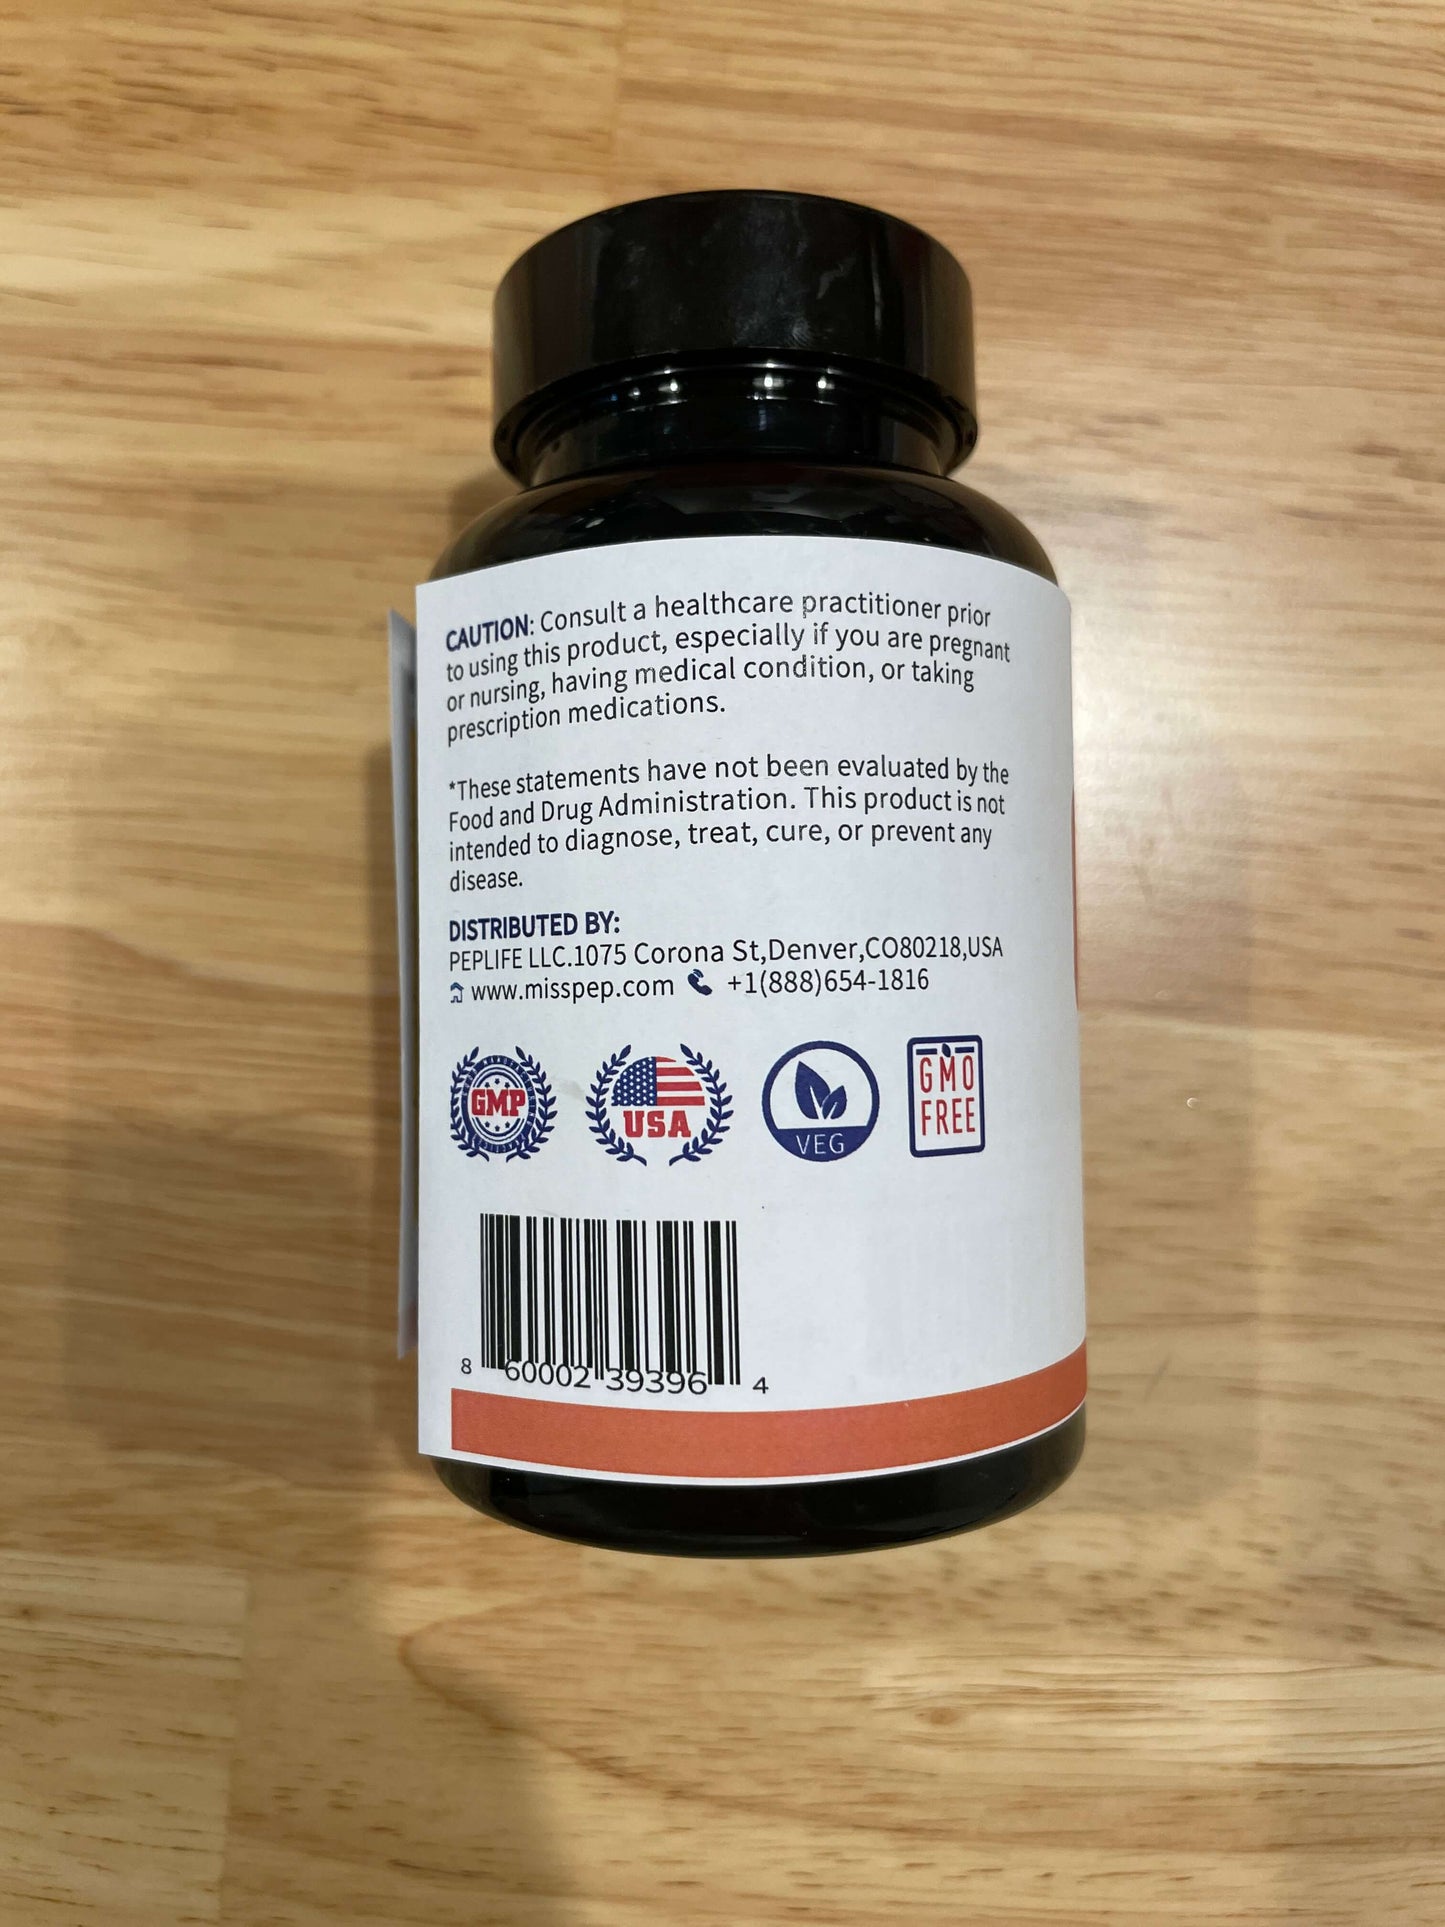 DreamVitas Vitamin C Chewable 500mg for Antioxidant Protection